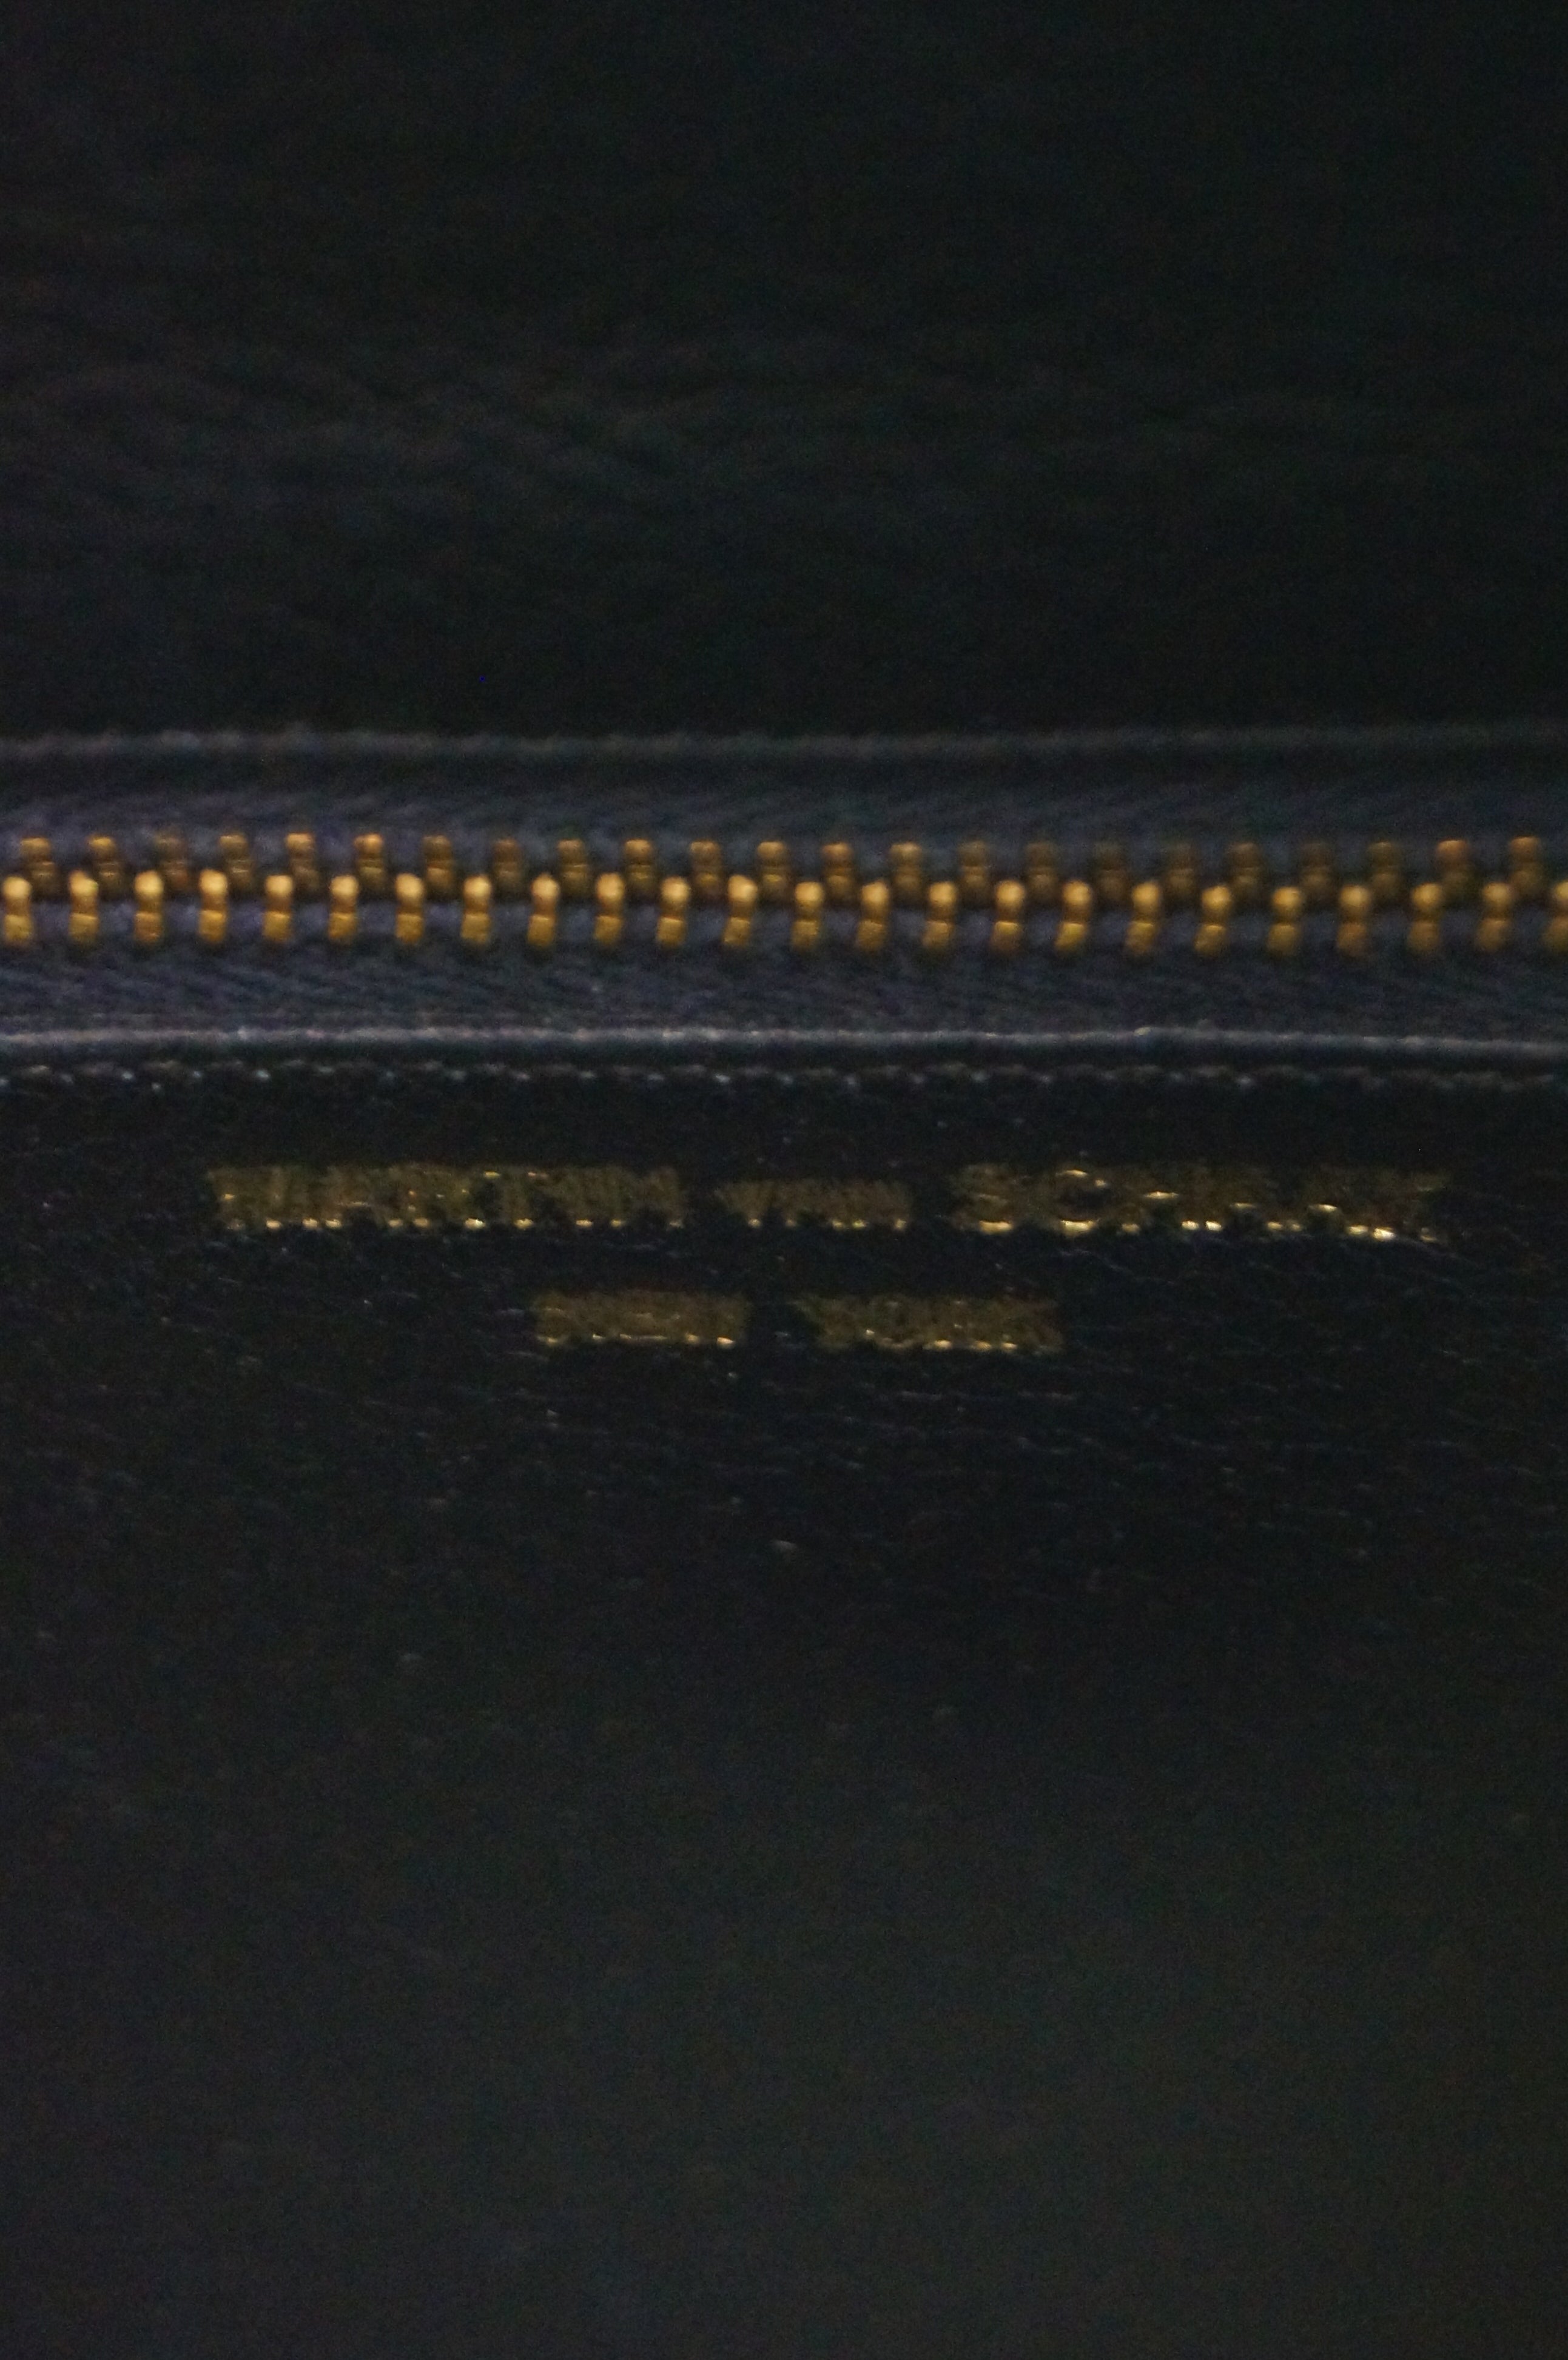 1960s Martin Van Schaak Custom Brown Java Lizard Skin Handbag Box Bag - MRS  Couture